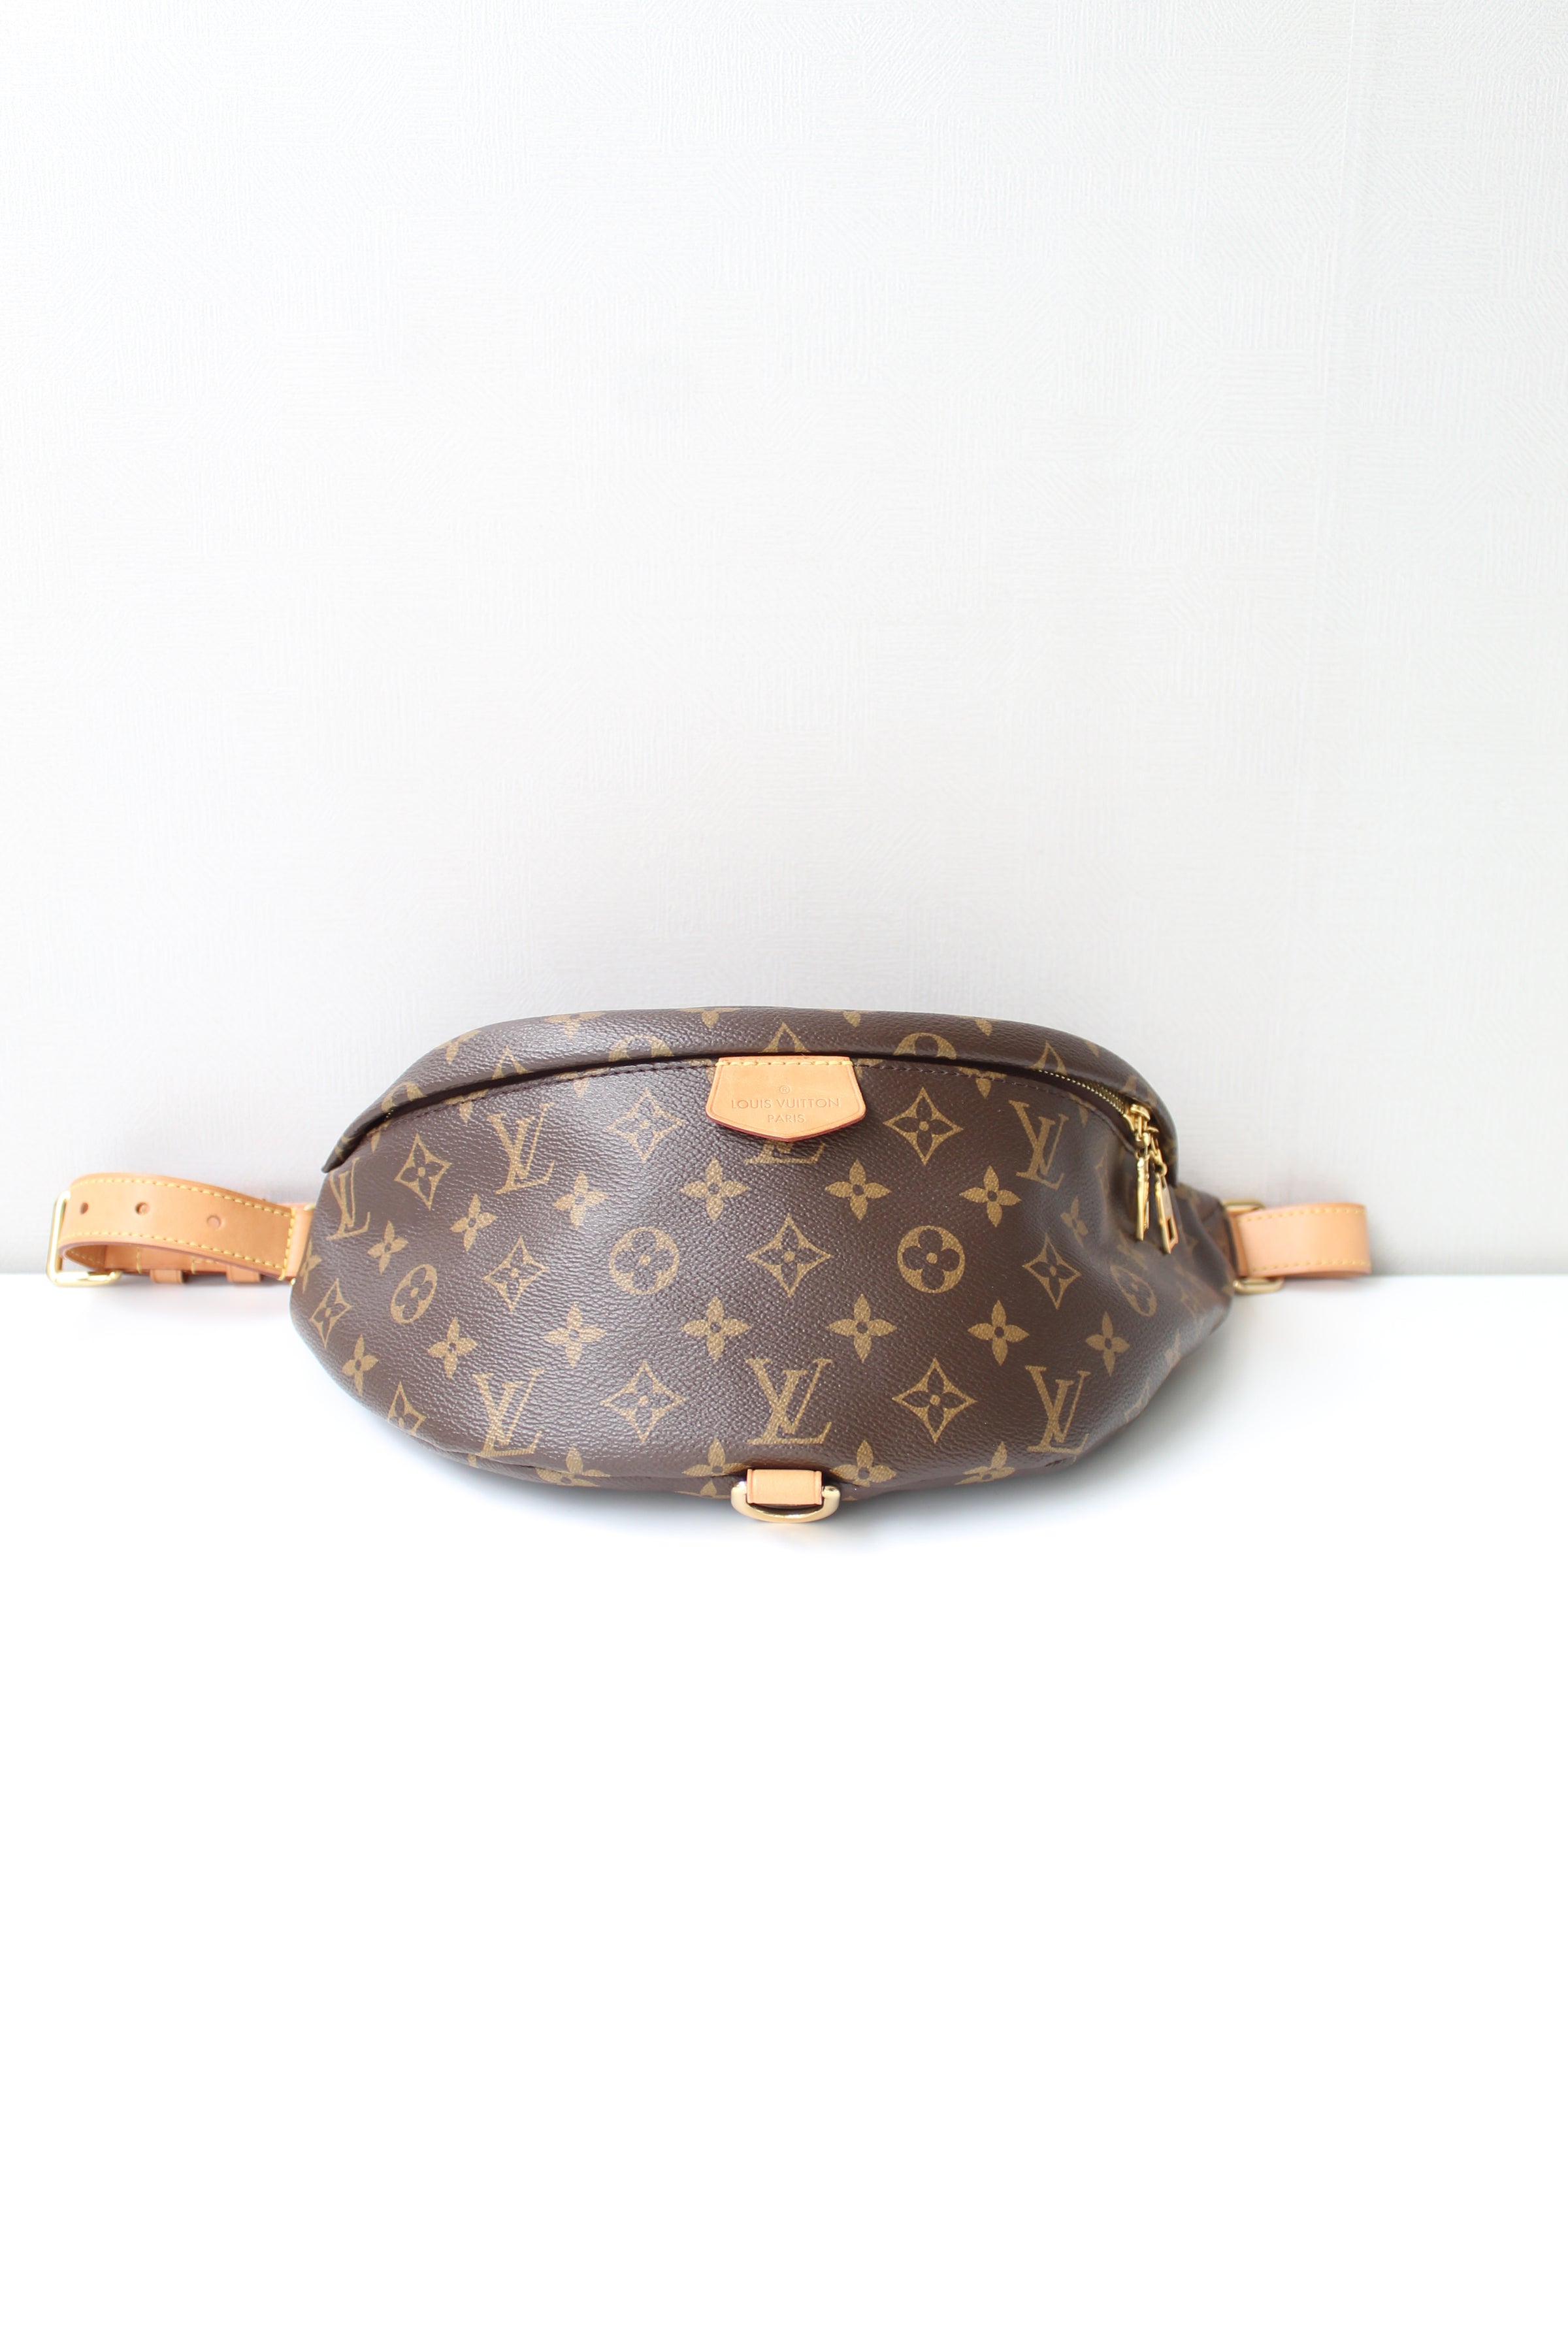 Louis Vuitton Belt Bag Bumbag - 6 For Sale on 1stDibs